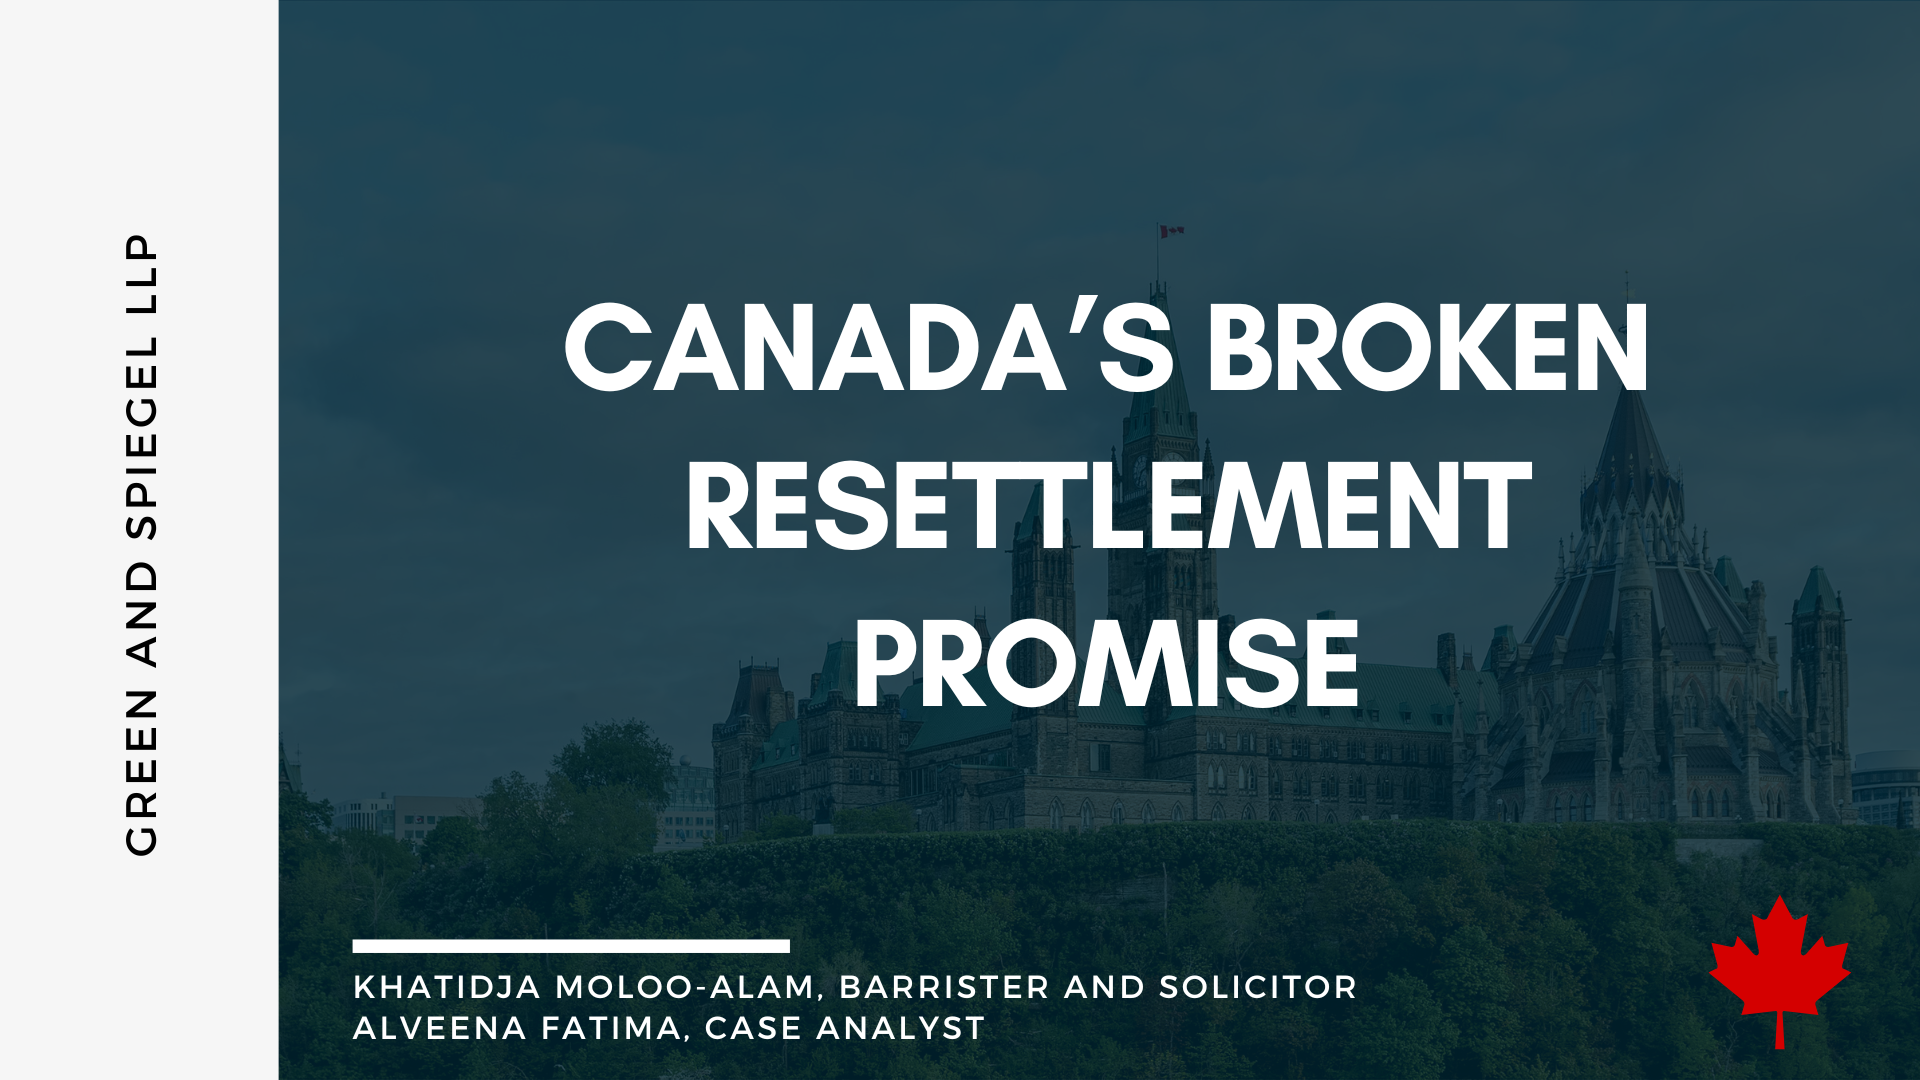 CANADA’S BROKEN RESETTLEMENT PROMISE